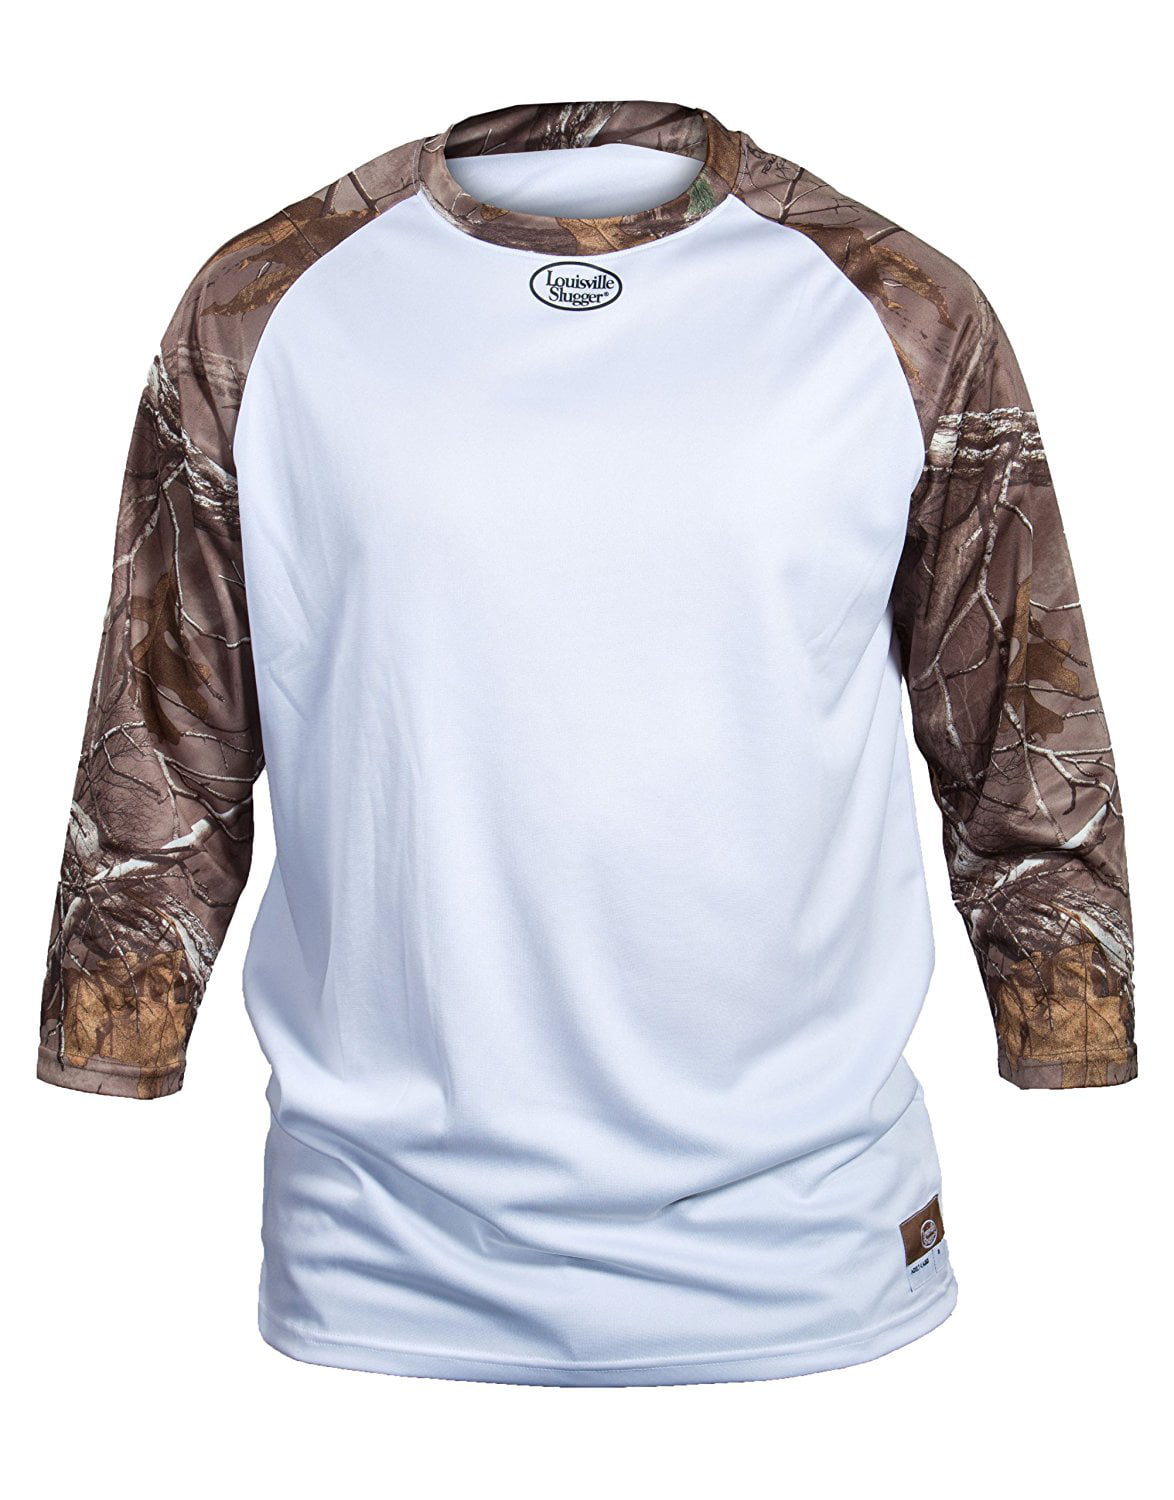 Medium New Louisville Slugger Boys Youth Loose-Fit Raglan S/S Shirt Size Small 